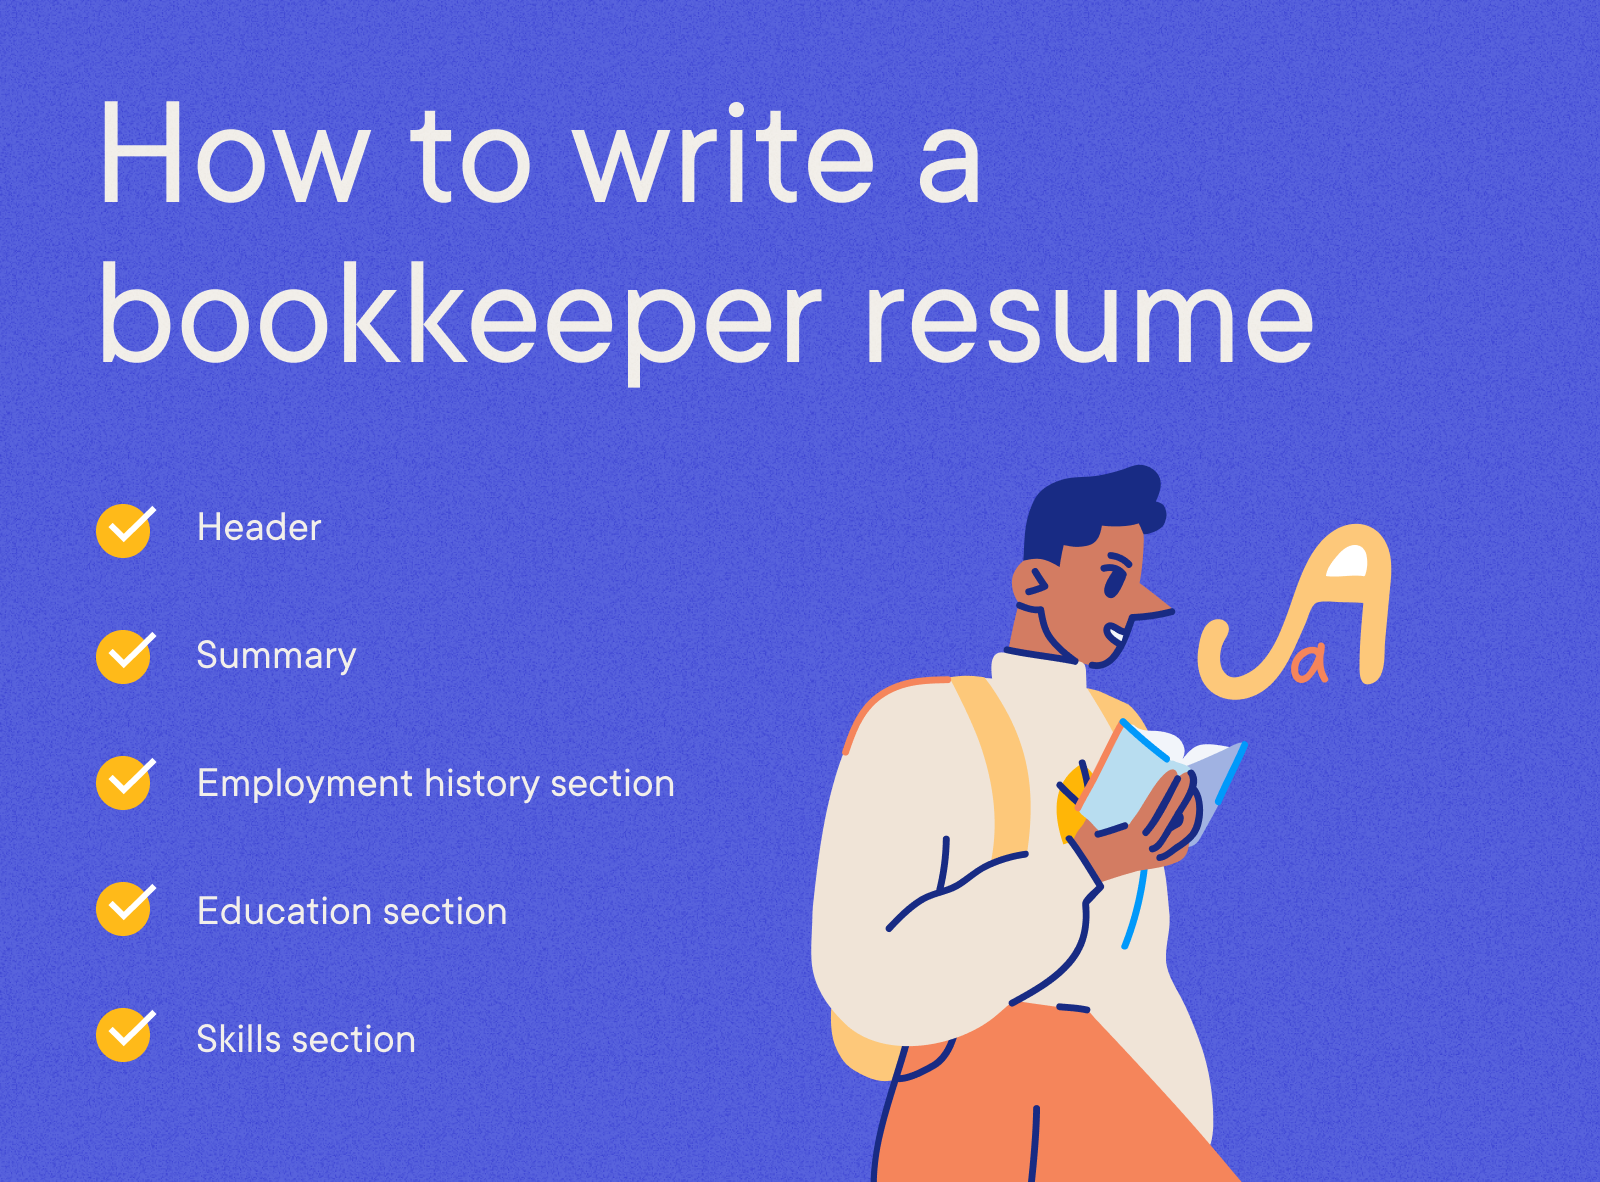 Bookkeeper - How to write a bookkeeper resume